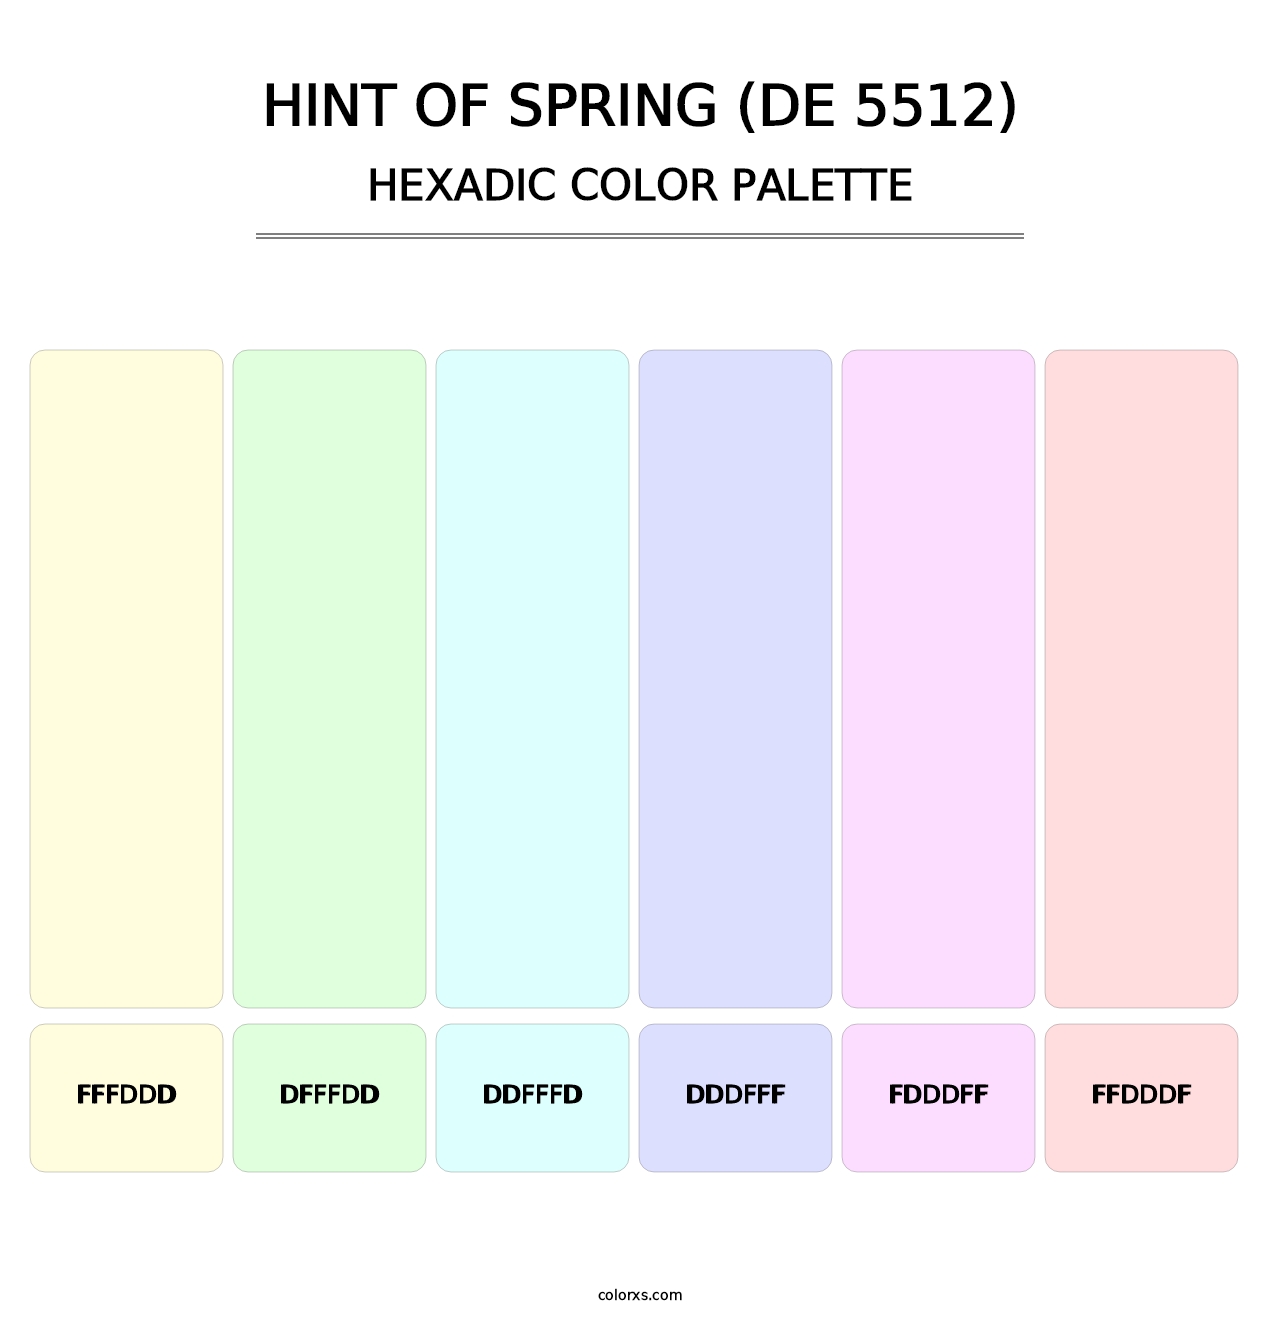 Hint of Spring (DE 5512) - Hexadic Color Palette